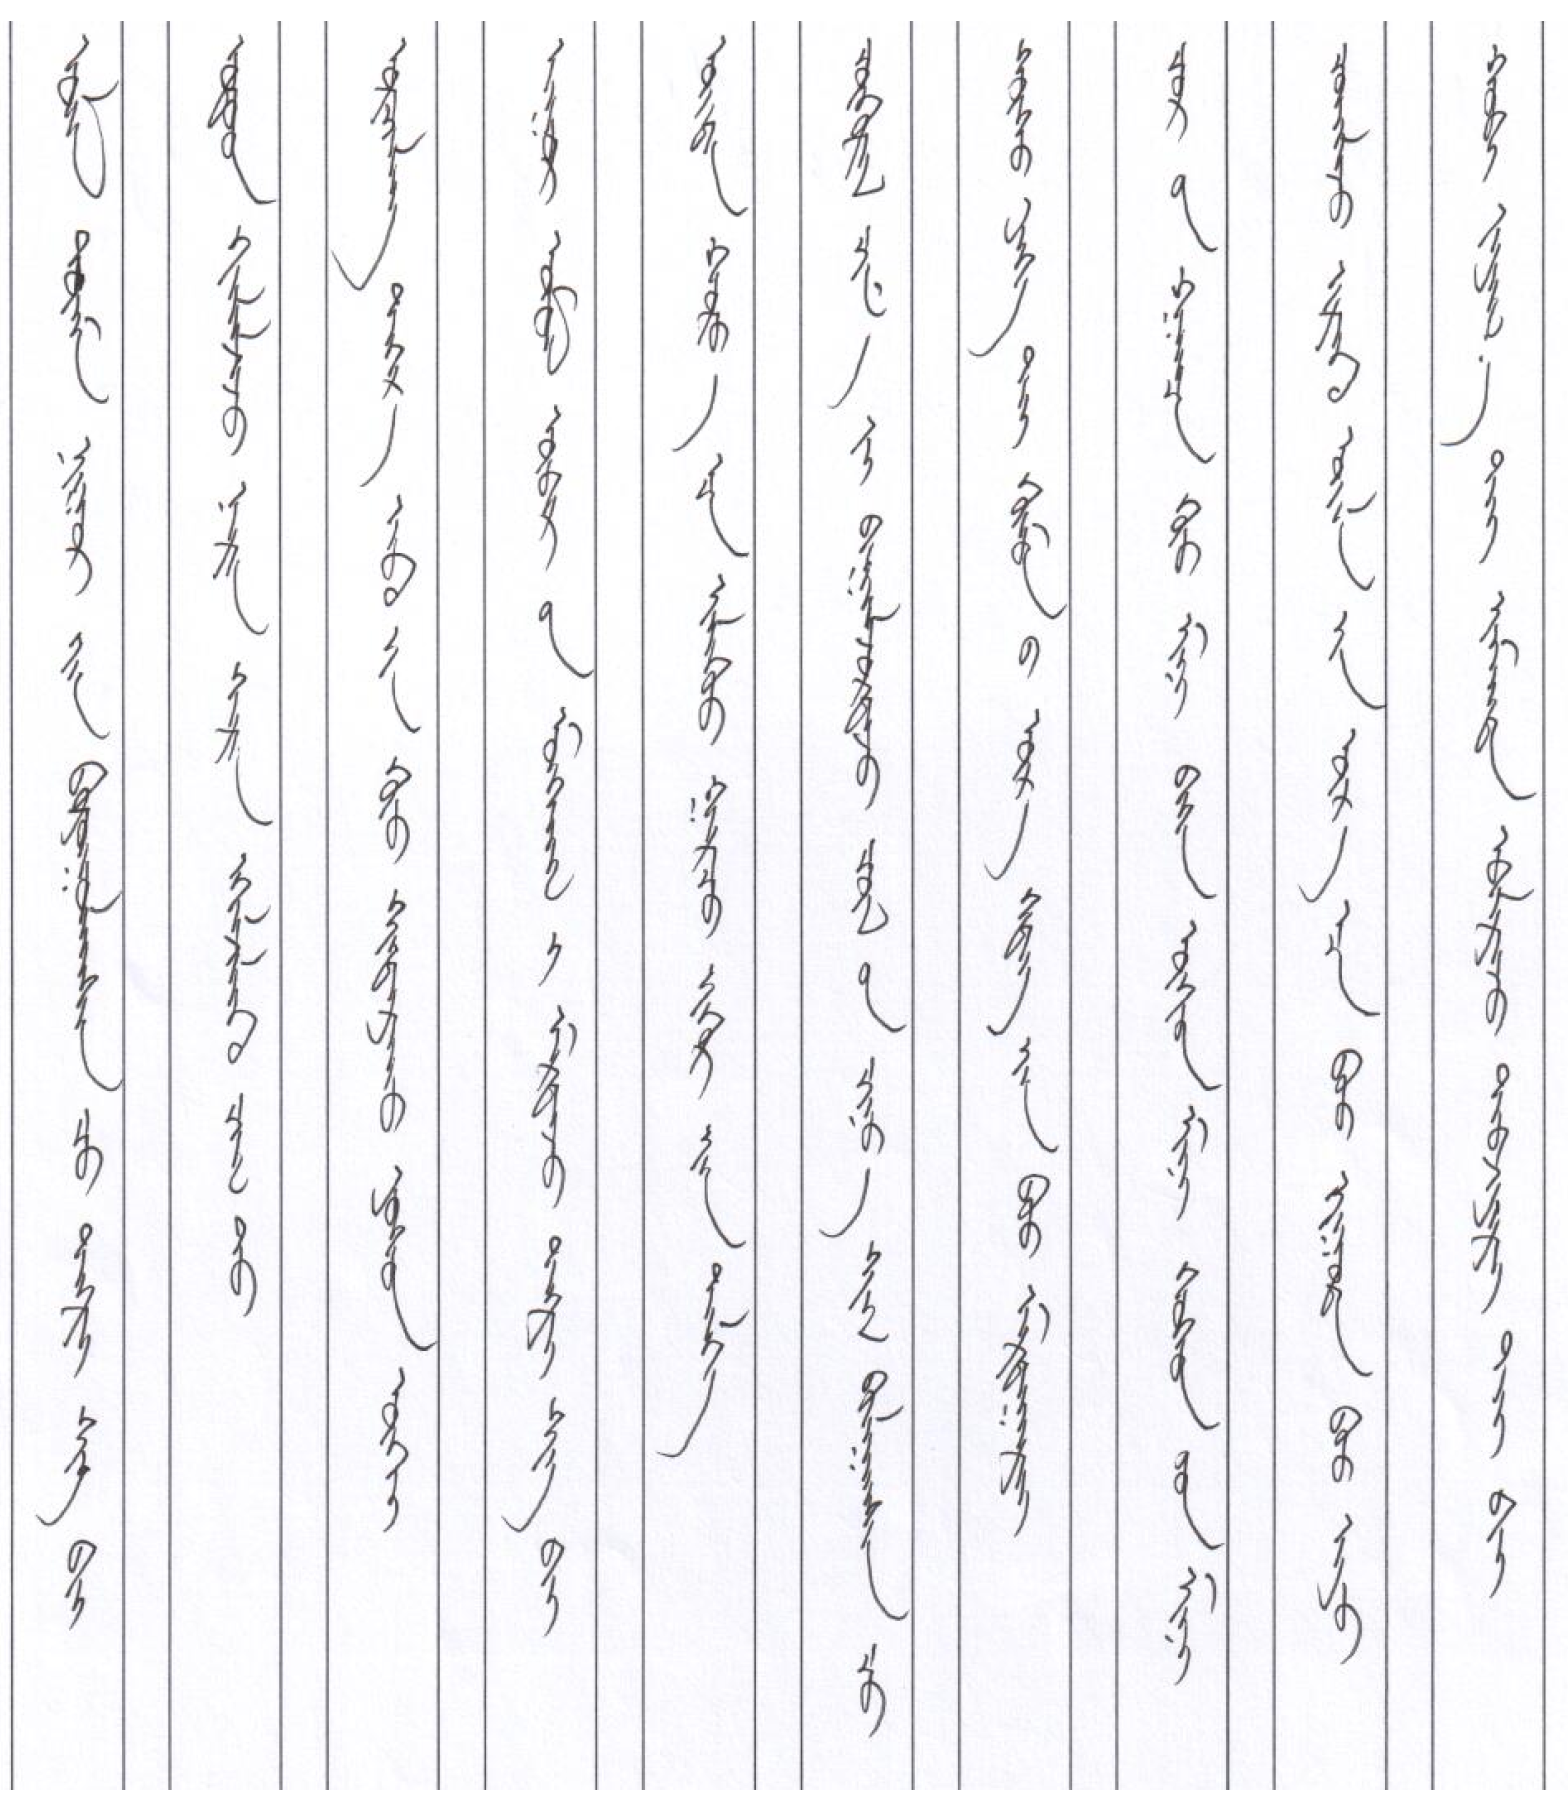 Super clean handwriting in english  English handwriting practice 